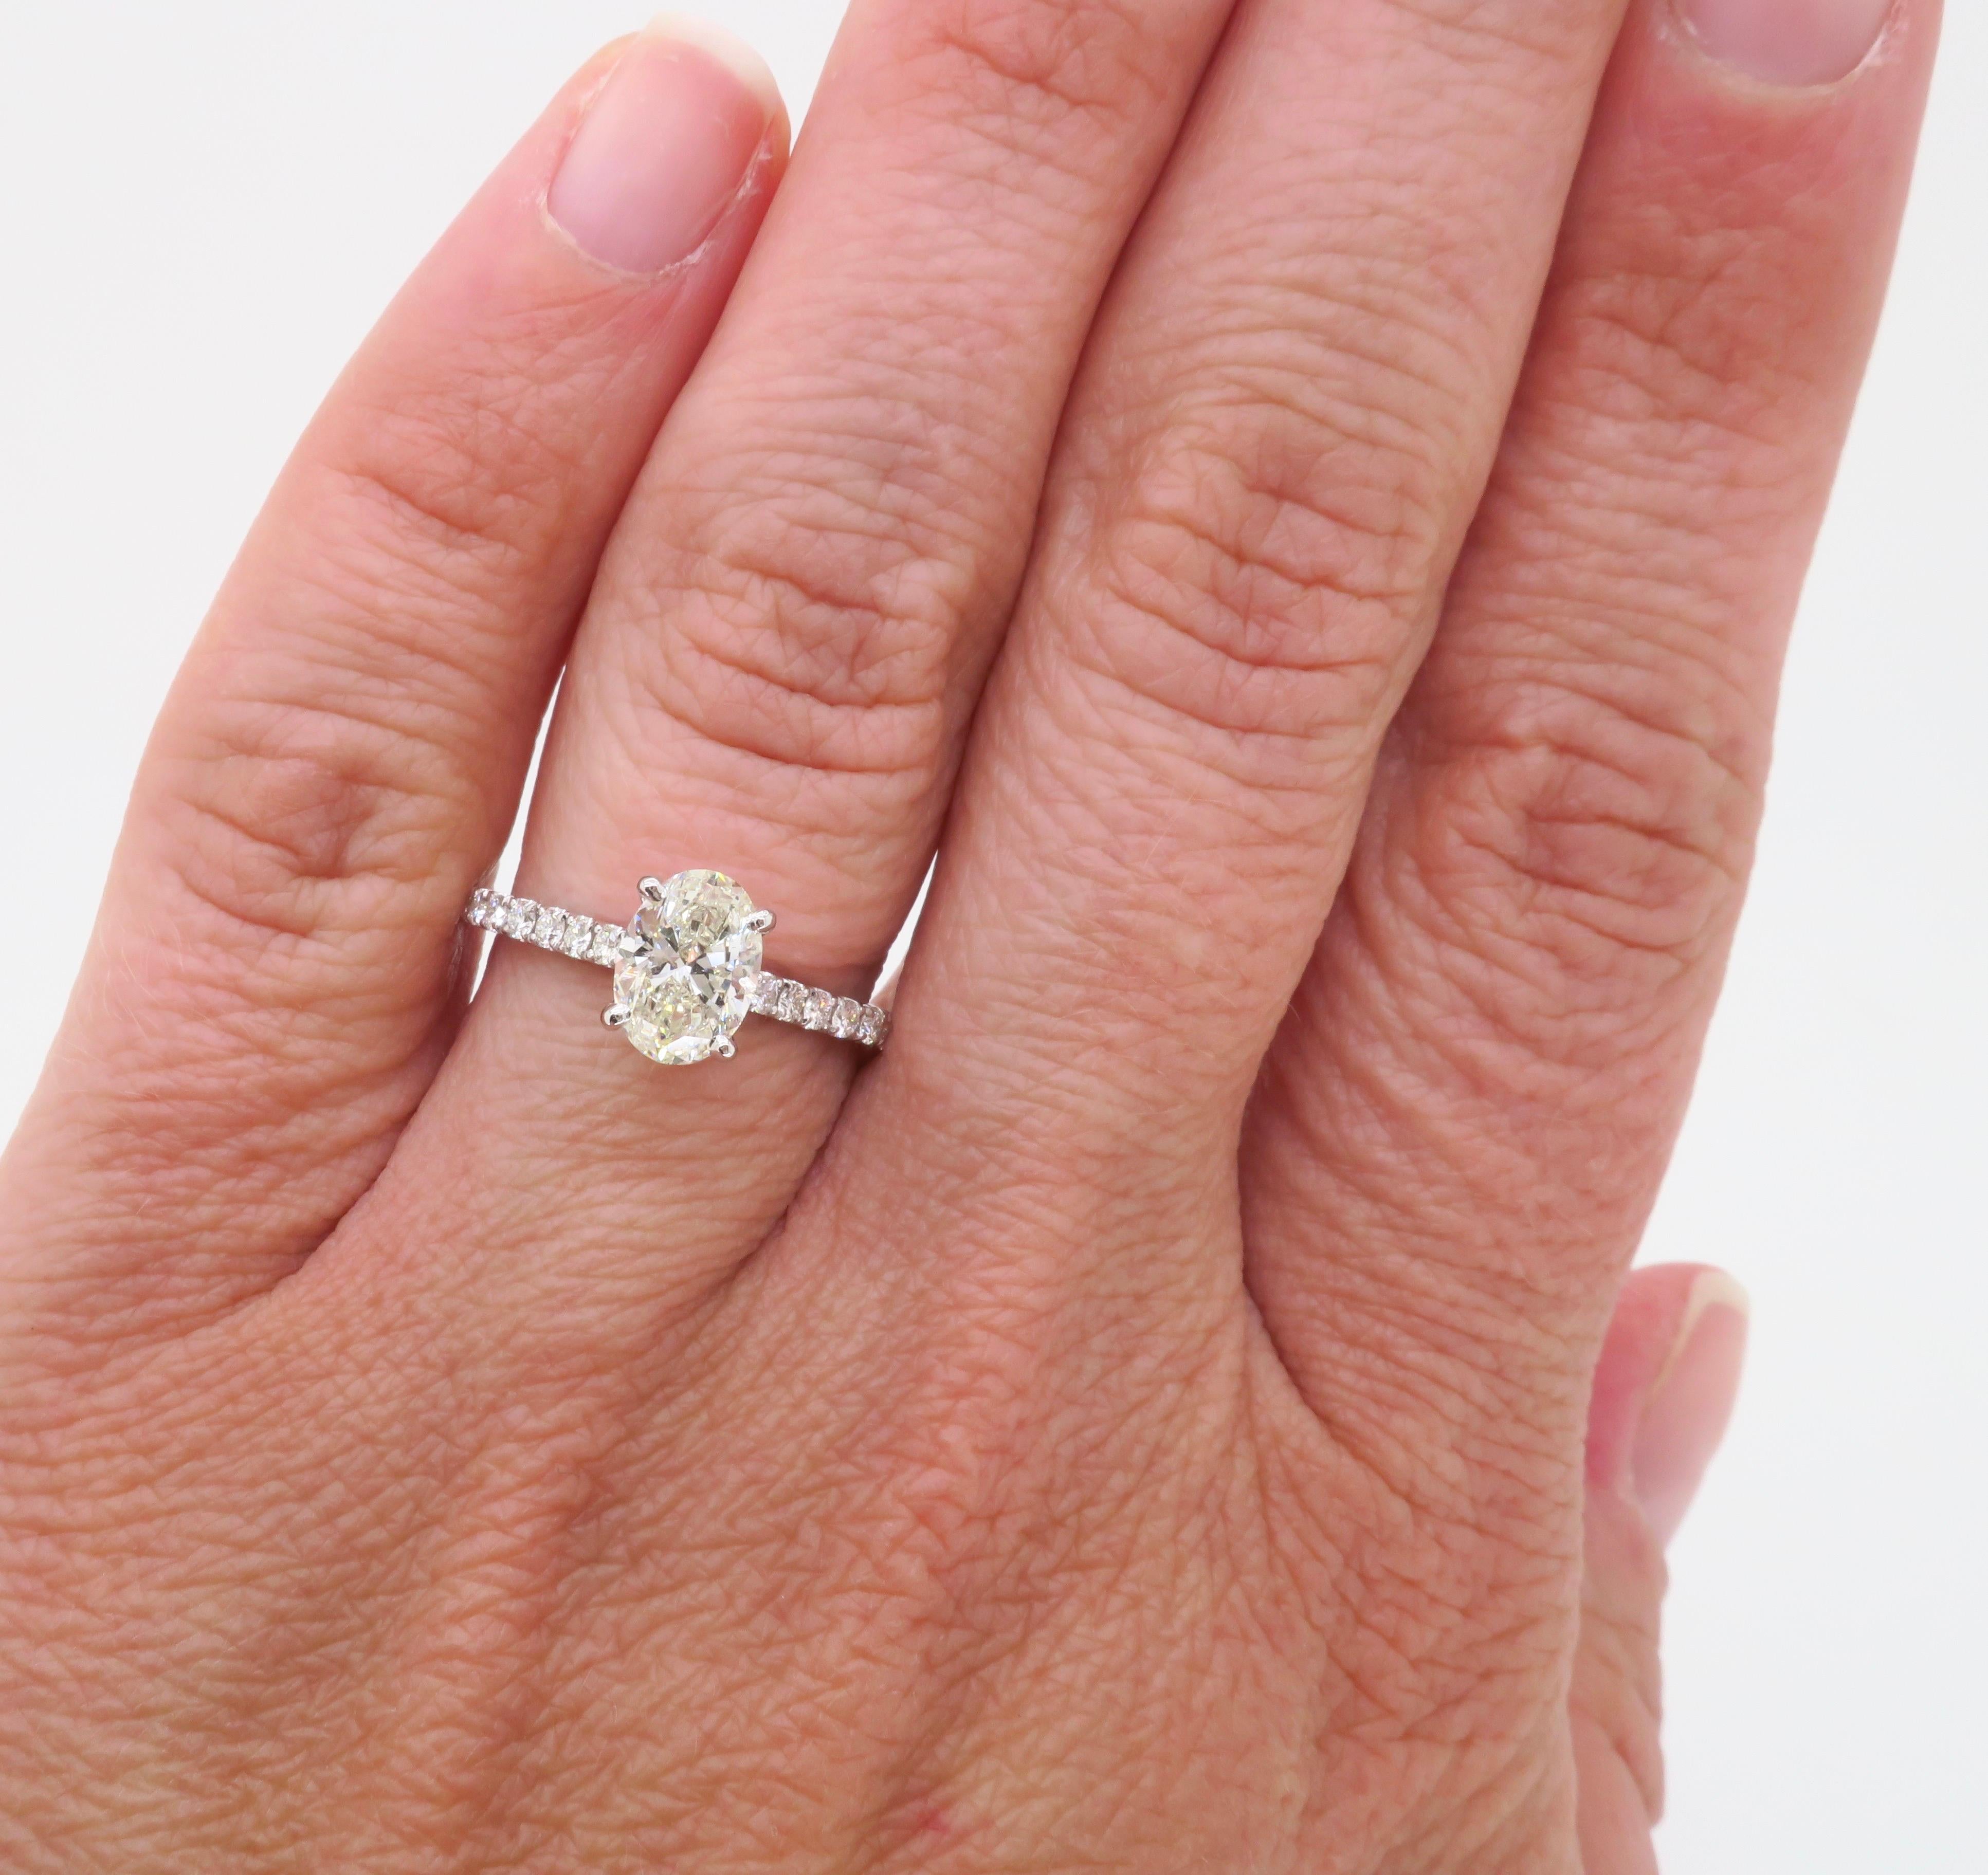 Beautiful Oval diamond set in a classic pavé set diamond engagement ring made by Simon G in 18k white gold. 

Diamond Carat Weight: 1.02CT
Diamond Cut: Oval Brilliant
Diamond Color: J
Diamond Clarity: SI2
Total Diamond Carat Weight: 1.28CTW
Metal: